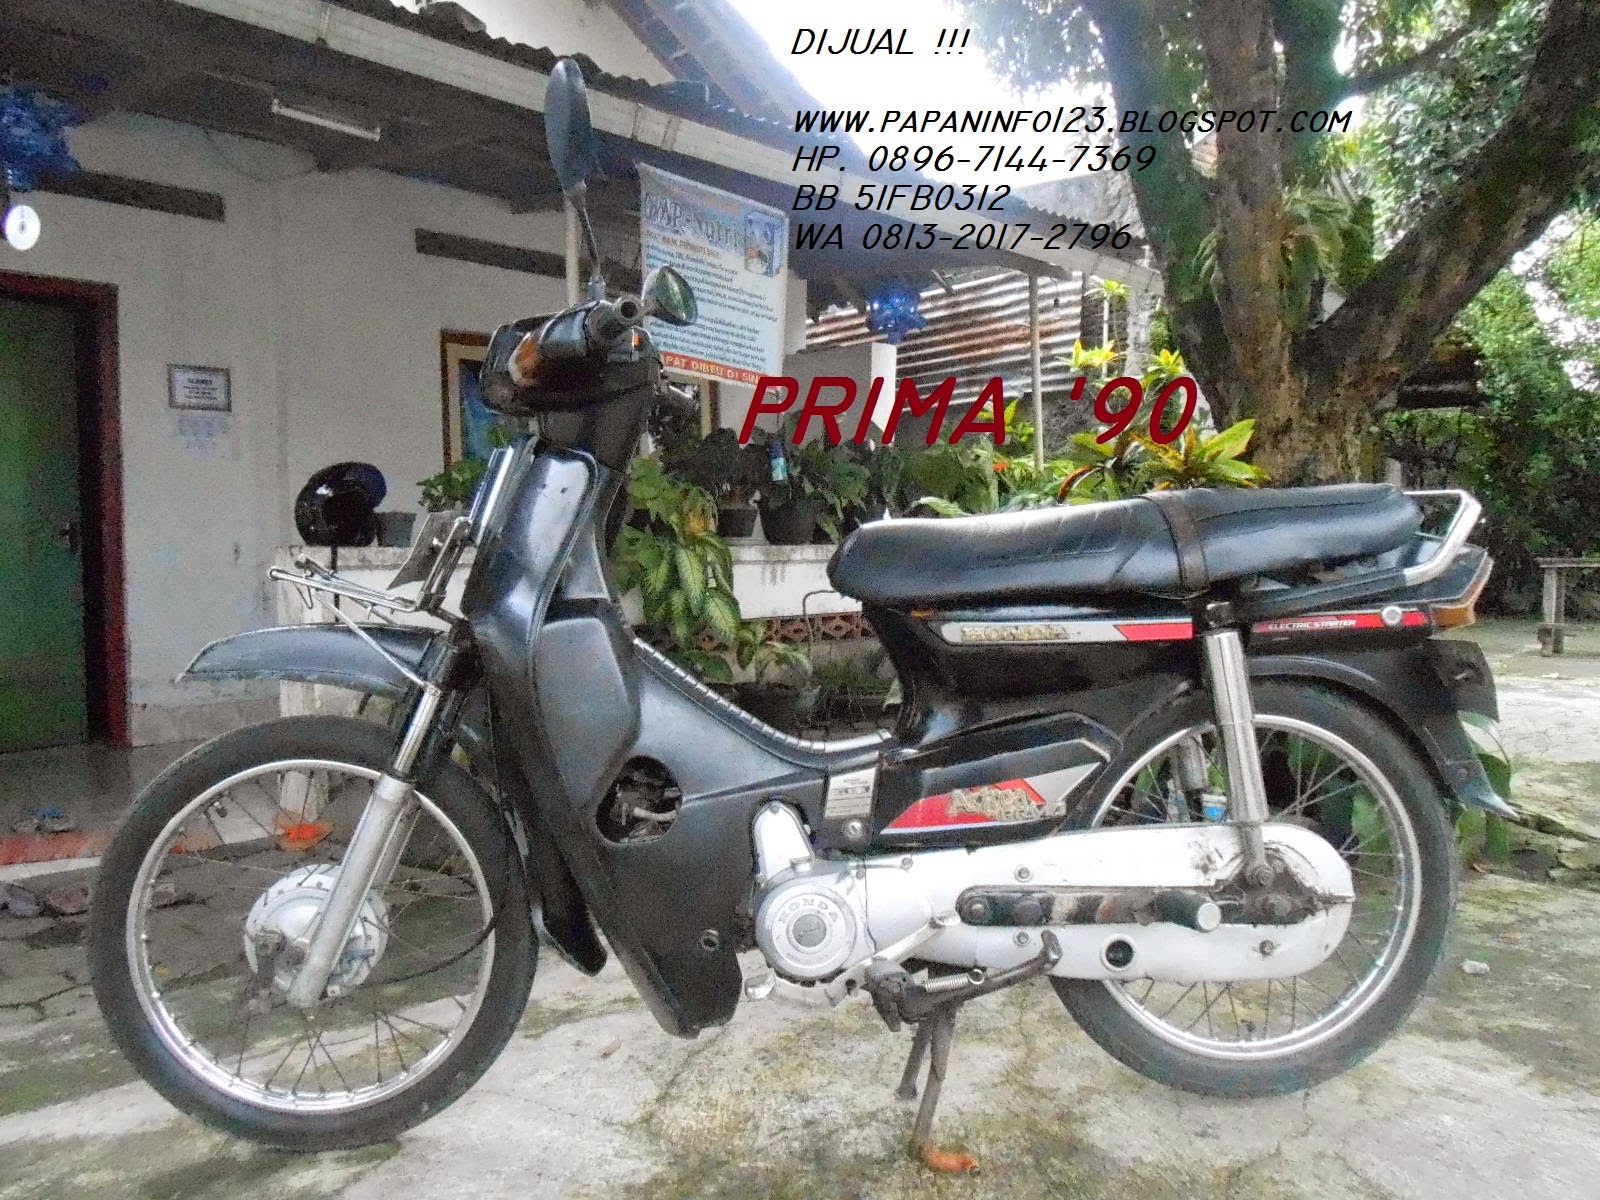 Dijual Honda Astrea Prima 1990 dan 1988 Plat Yogyakarta - PAPAN INFORMASI